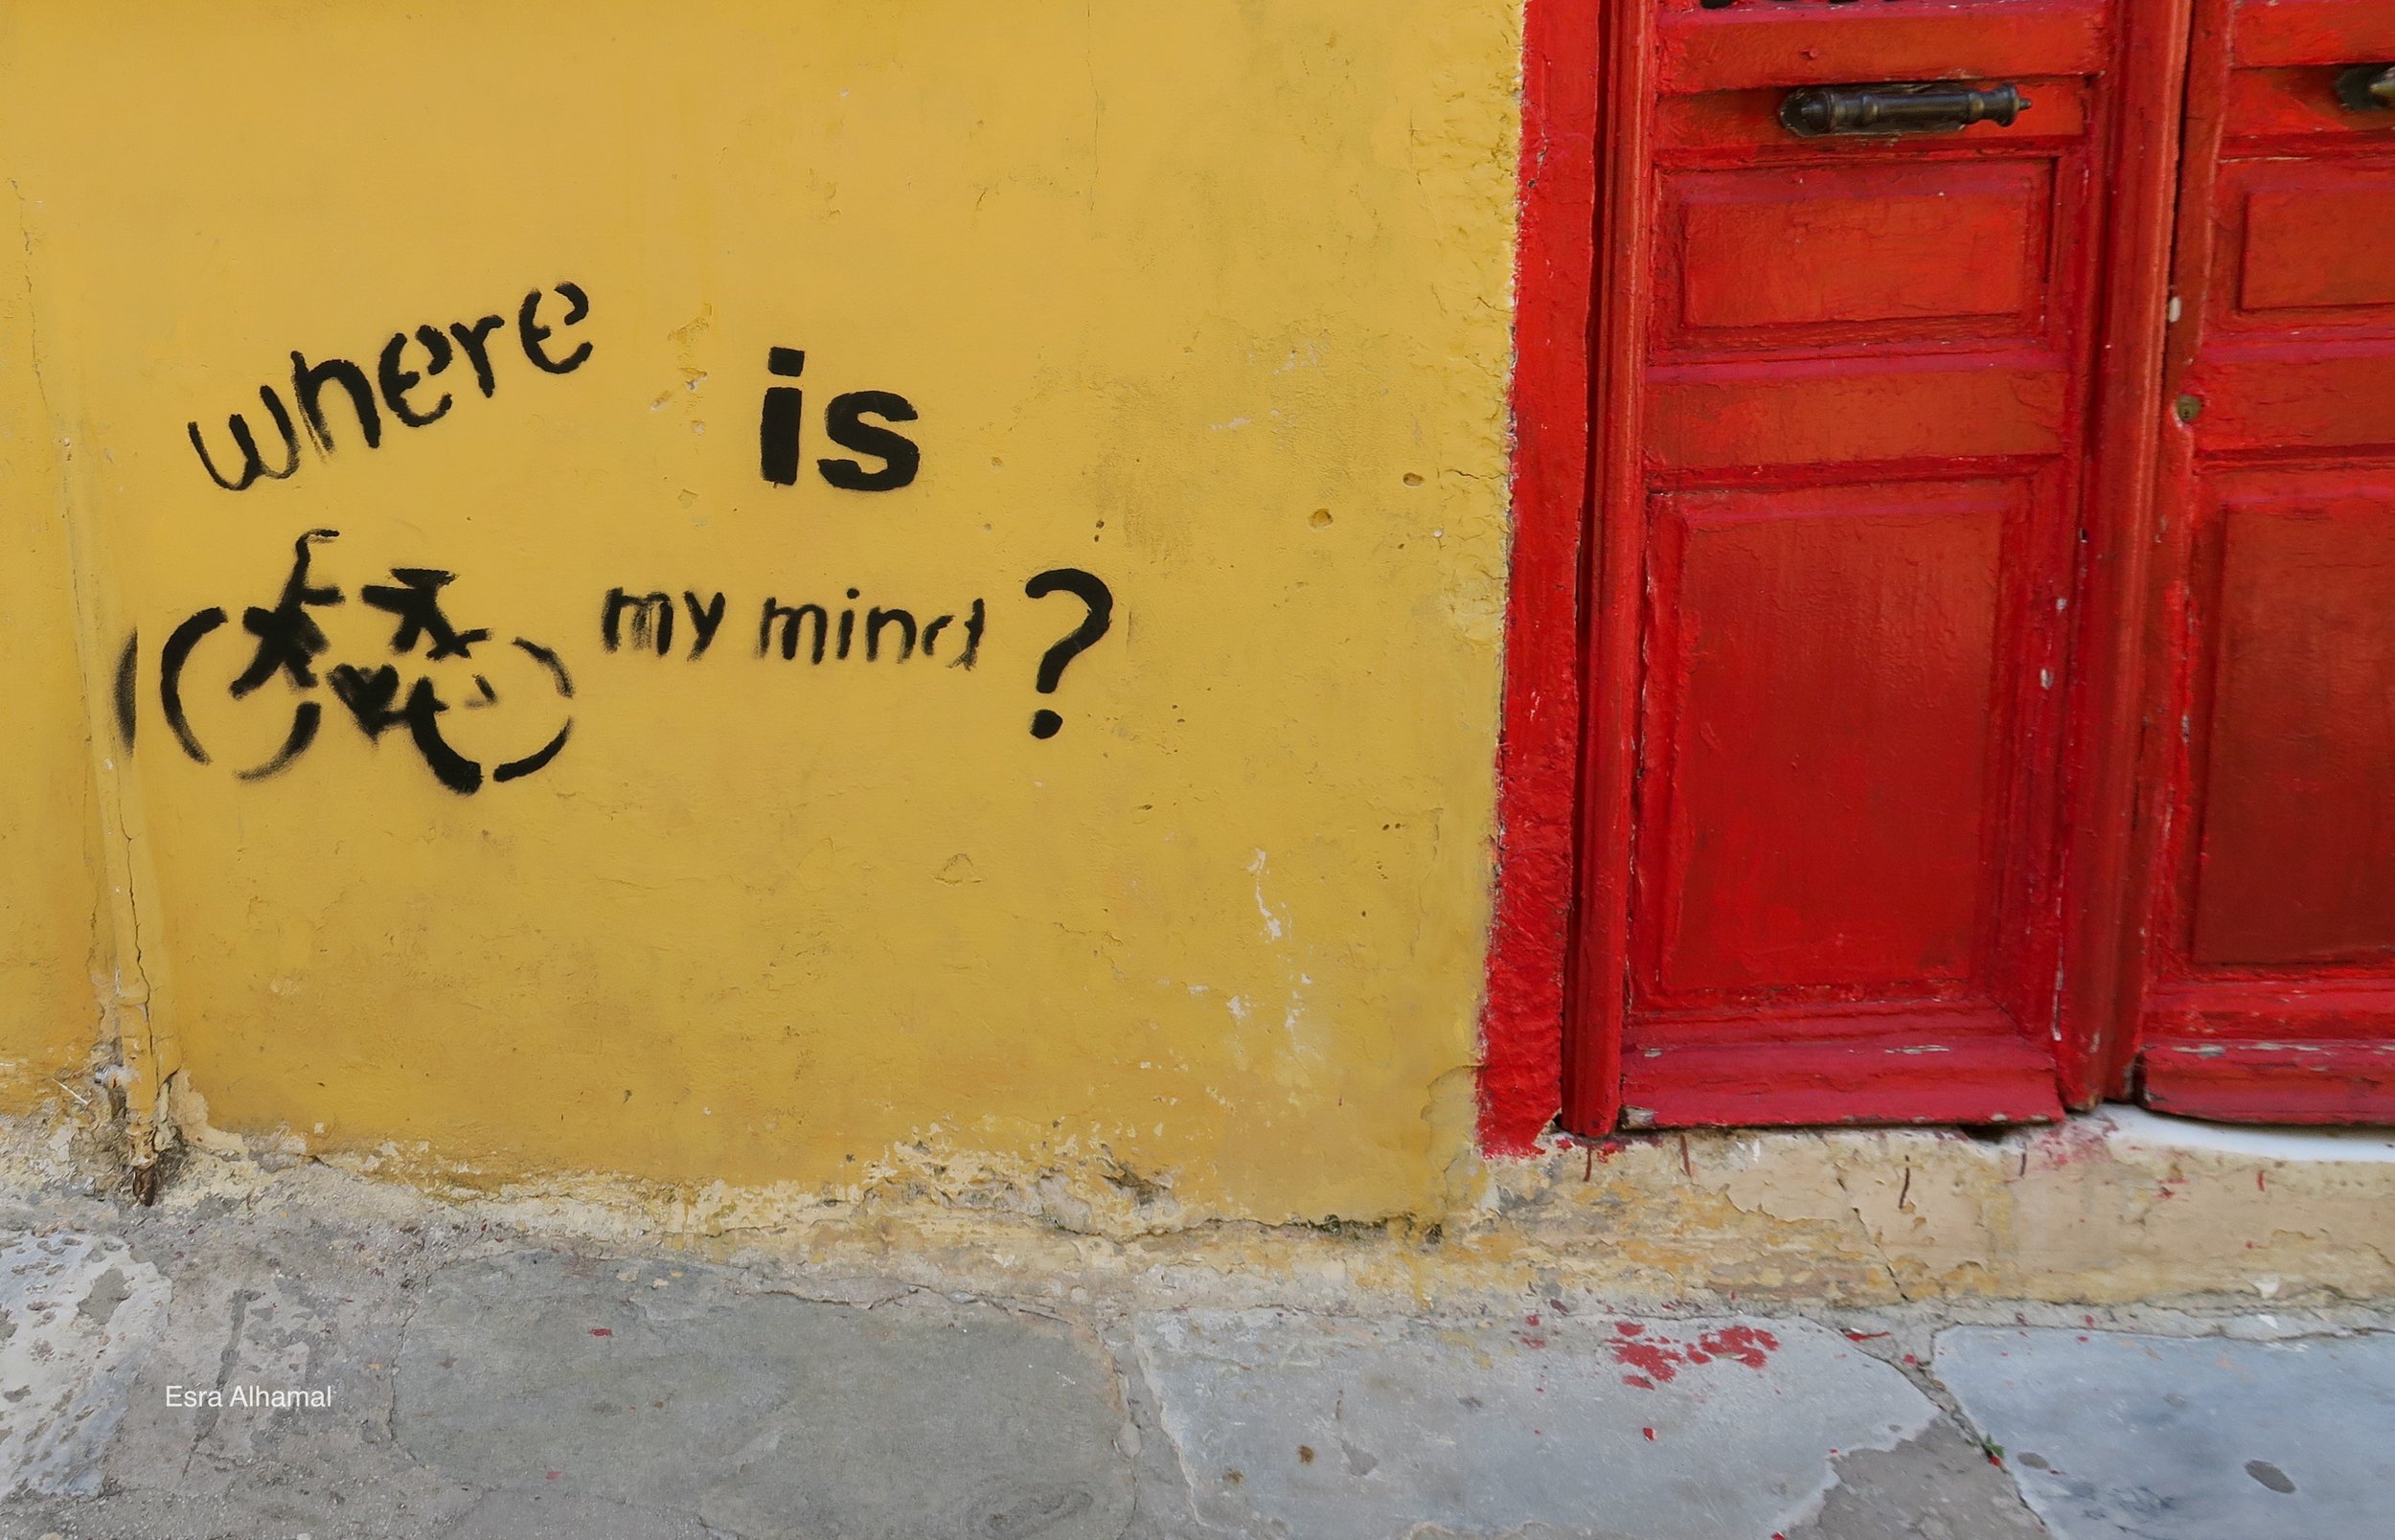 Where is my mind? Graffiti